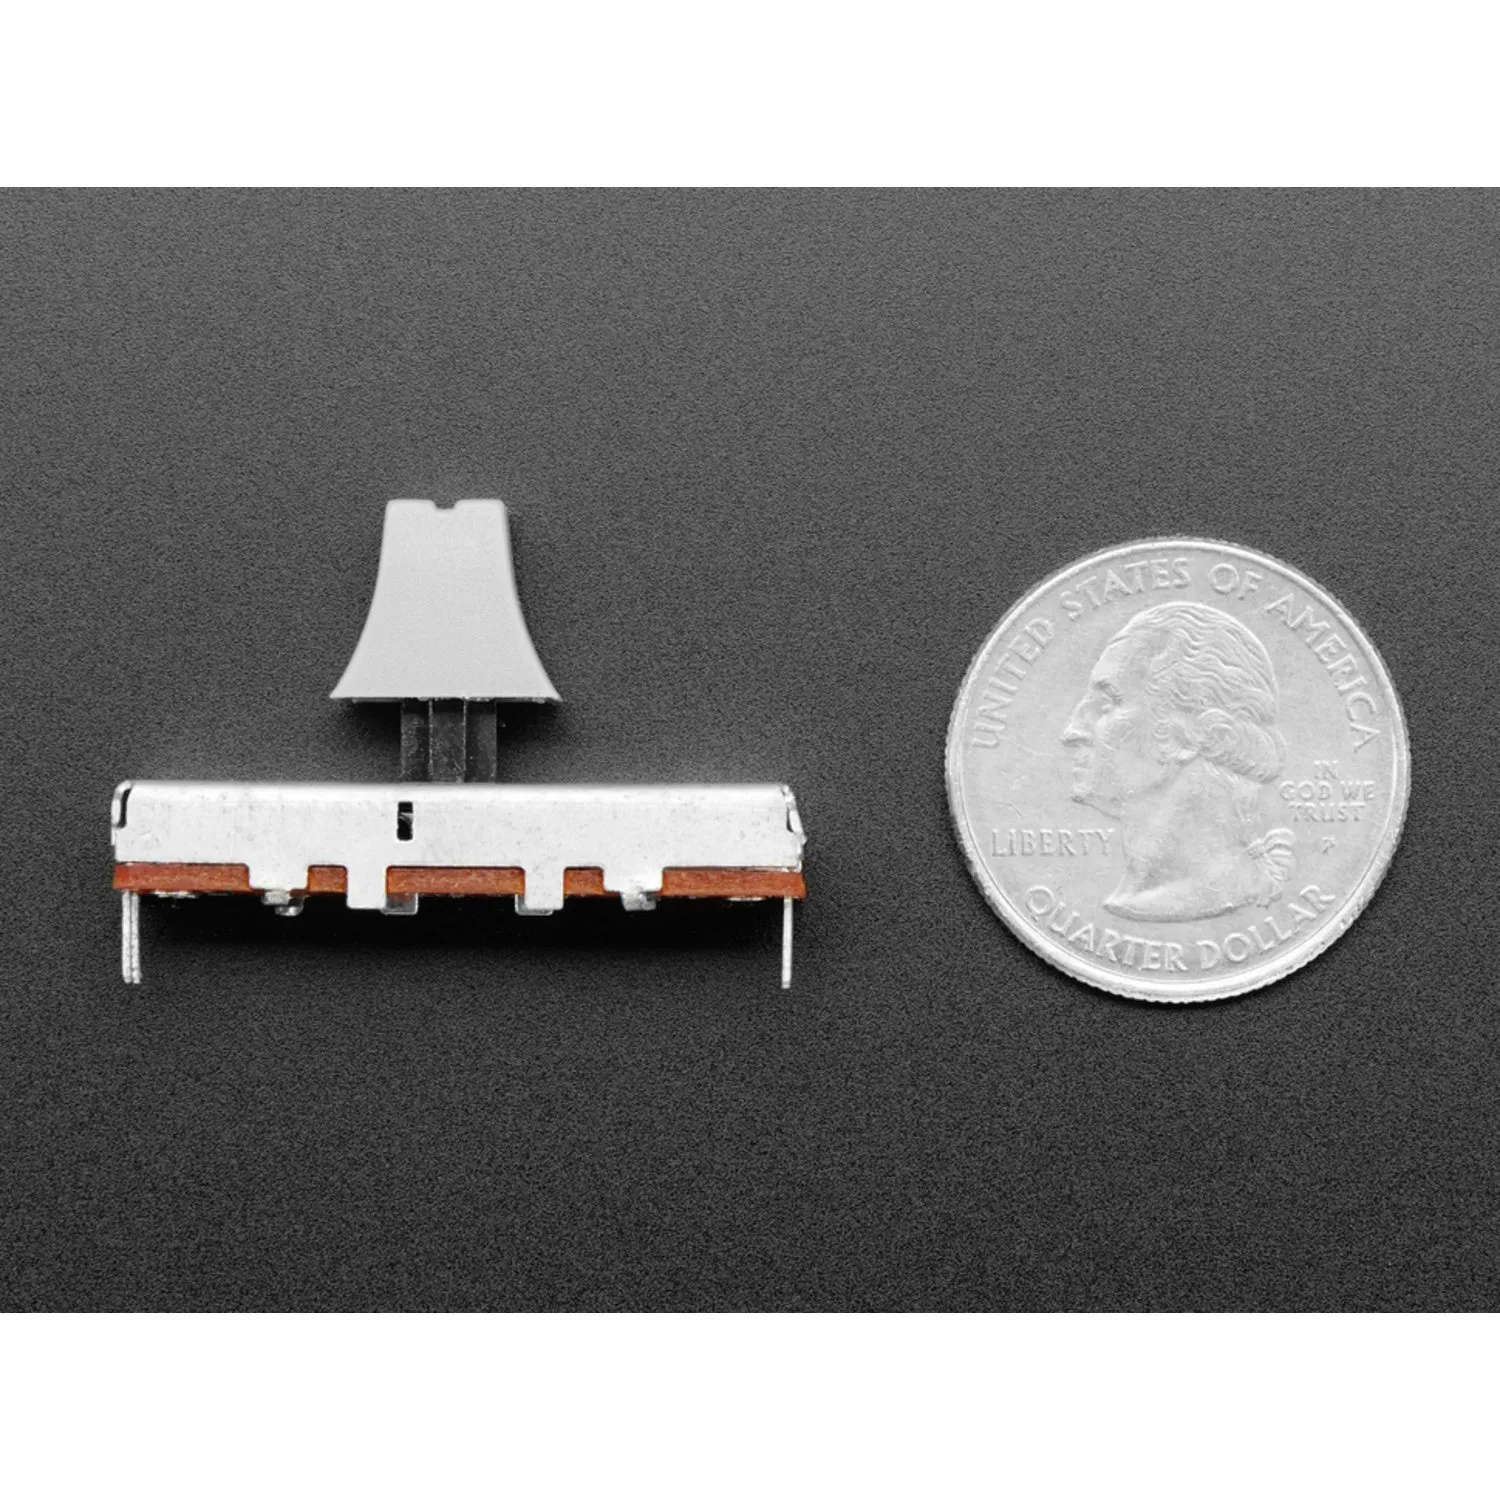 Photo of Slide Potentiometer with Plastic Knob - 35mm Long - 10KΩ